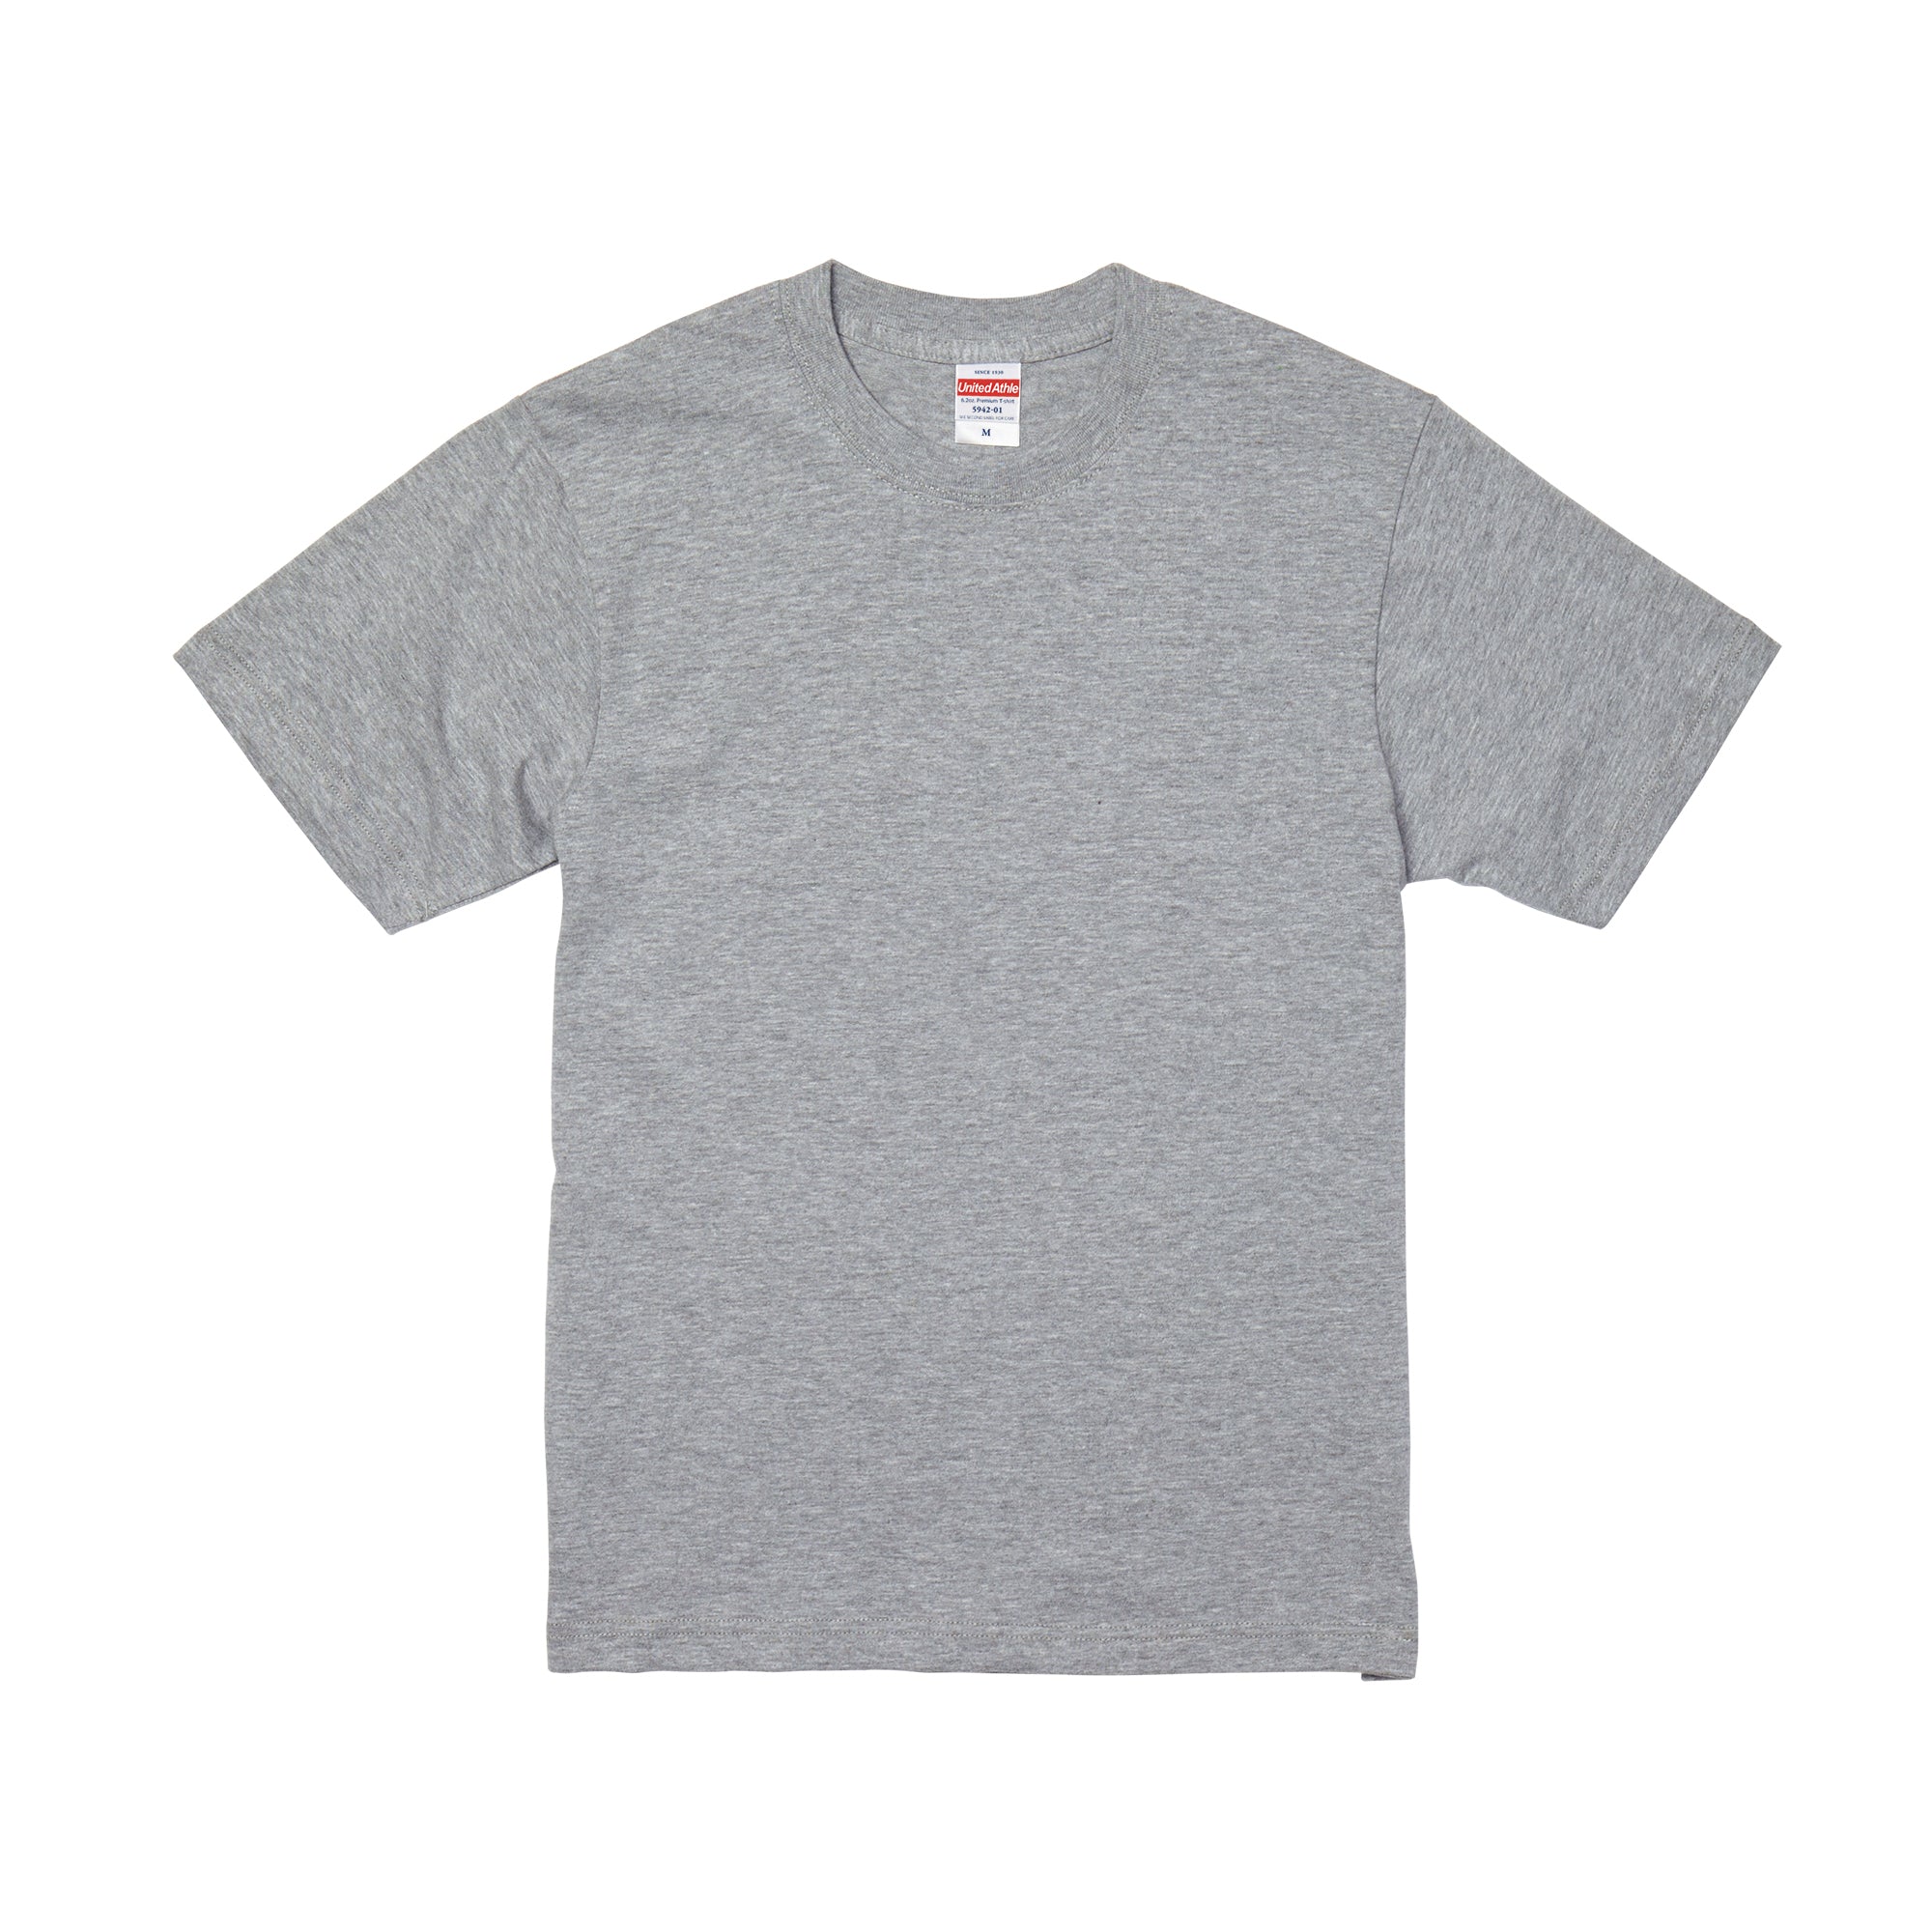 5942 - Classic heavyweight 6.2 oz T-shirt - Grey